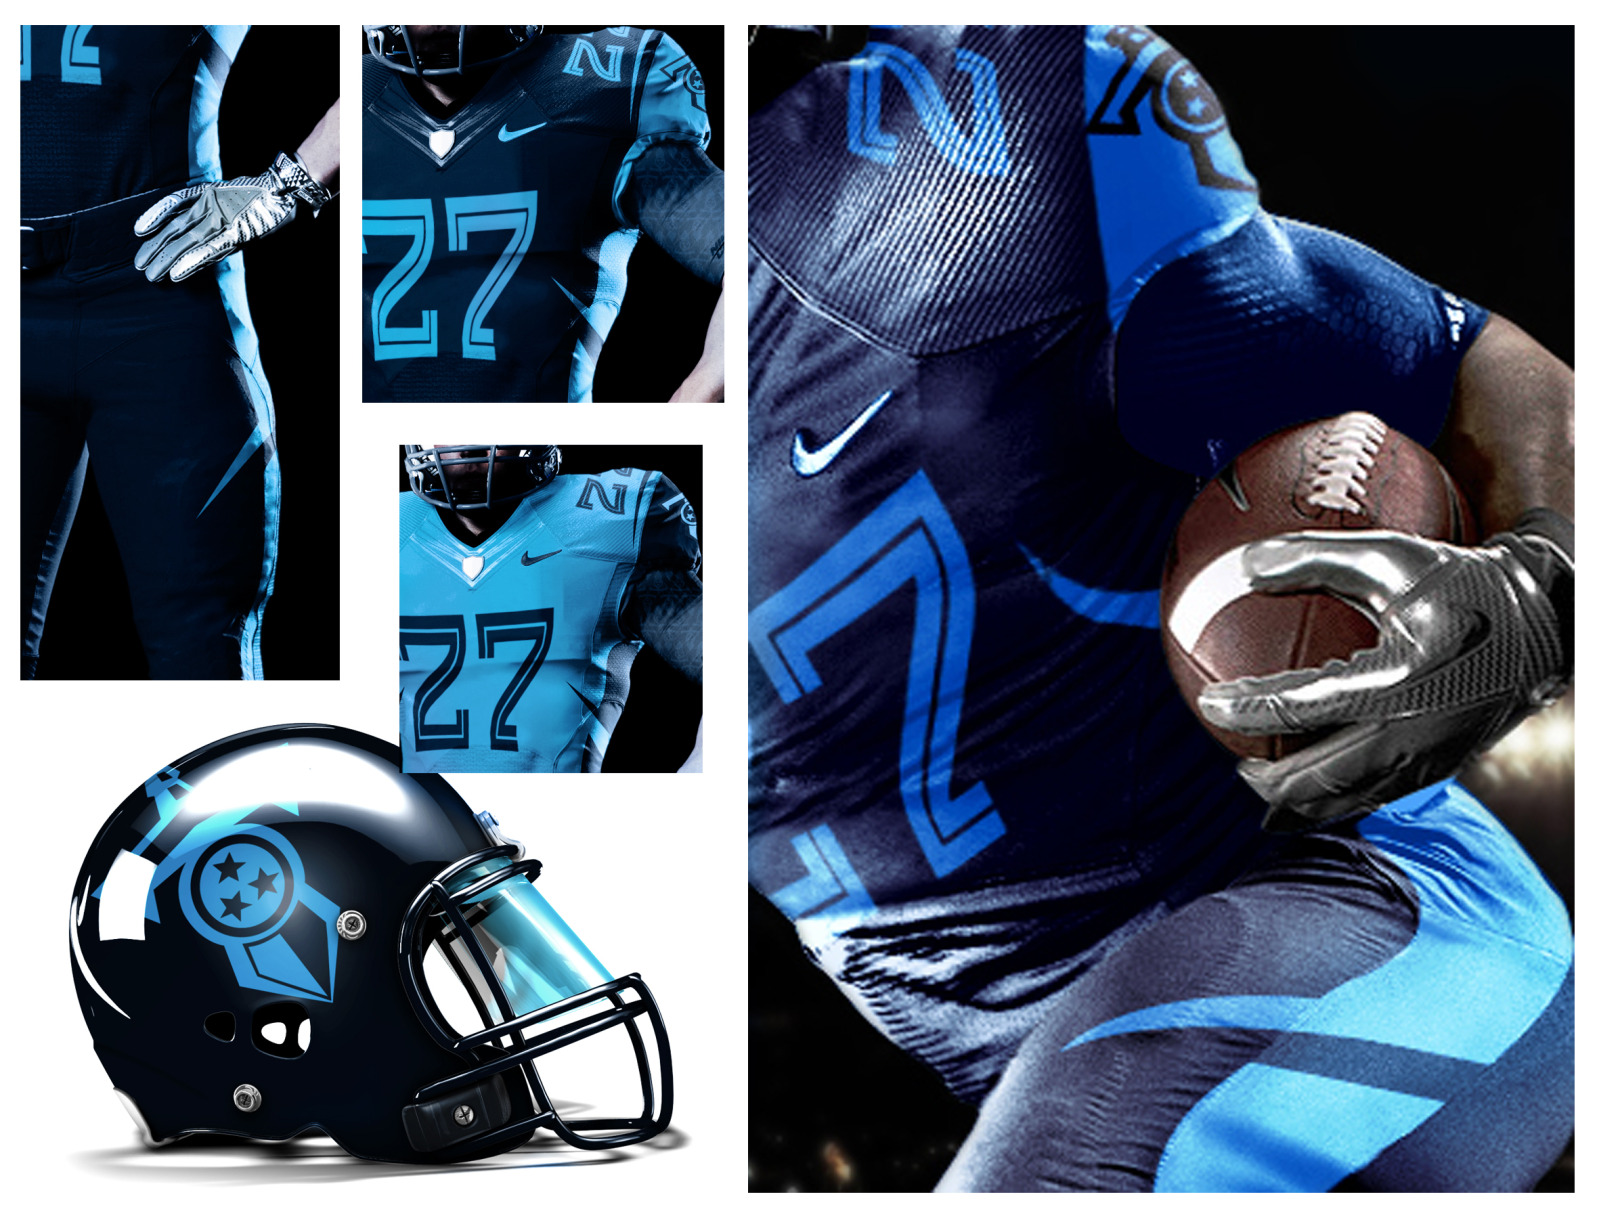 Tennessee Titans Uniform Concepts